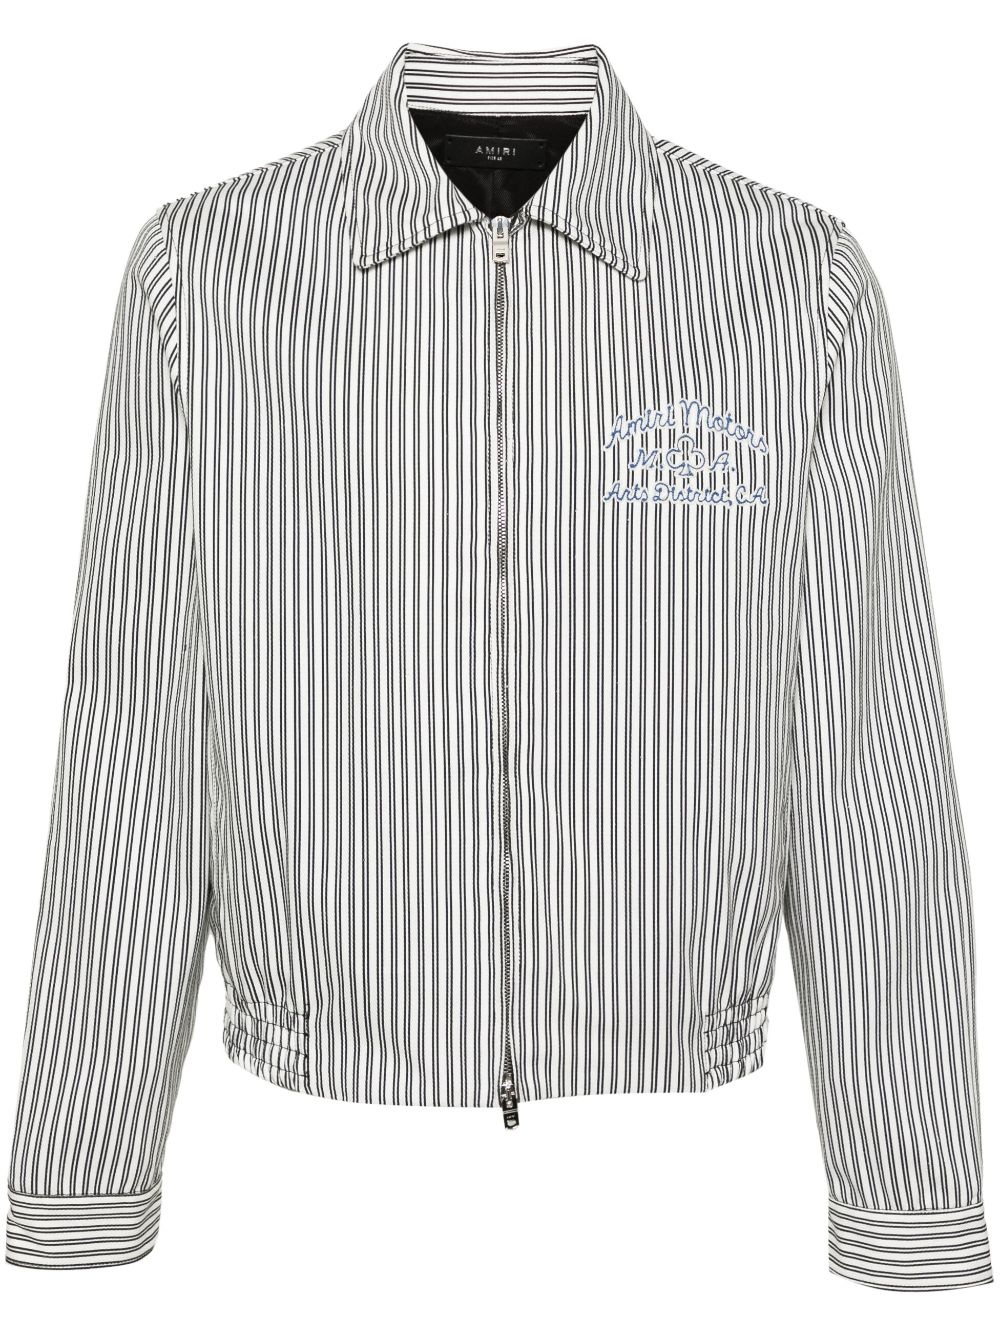 Motors cotton shirt jacket - 1